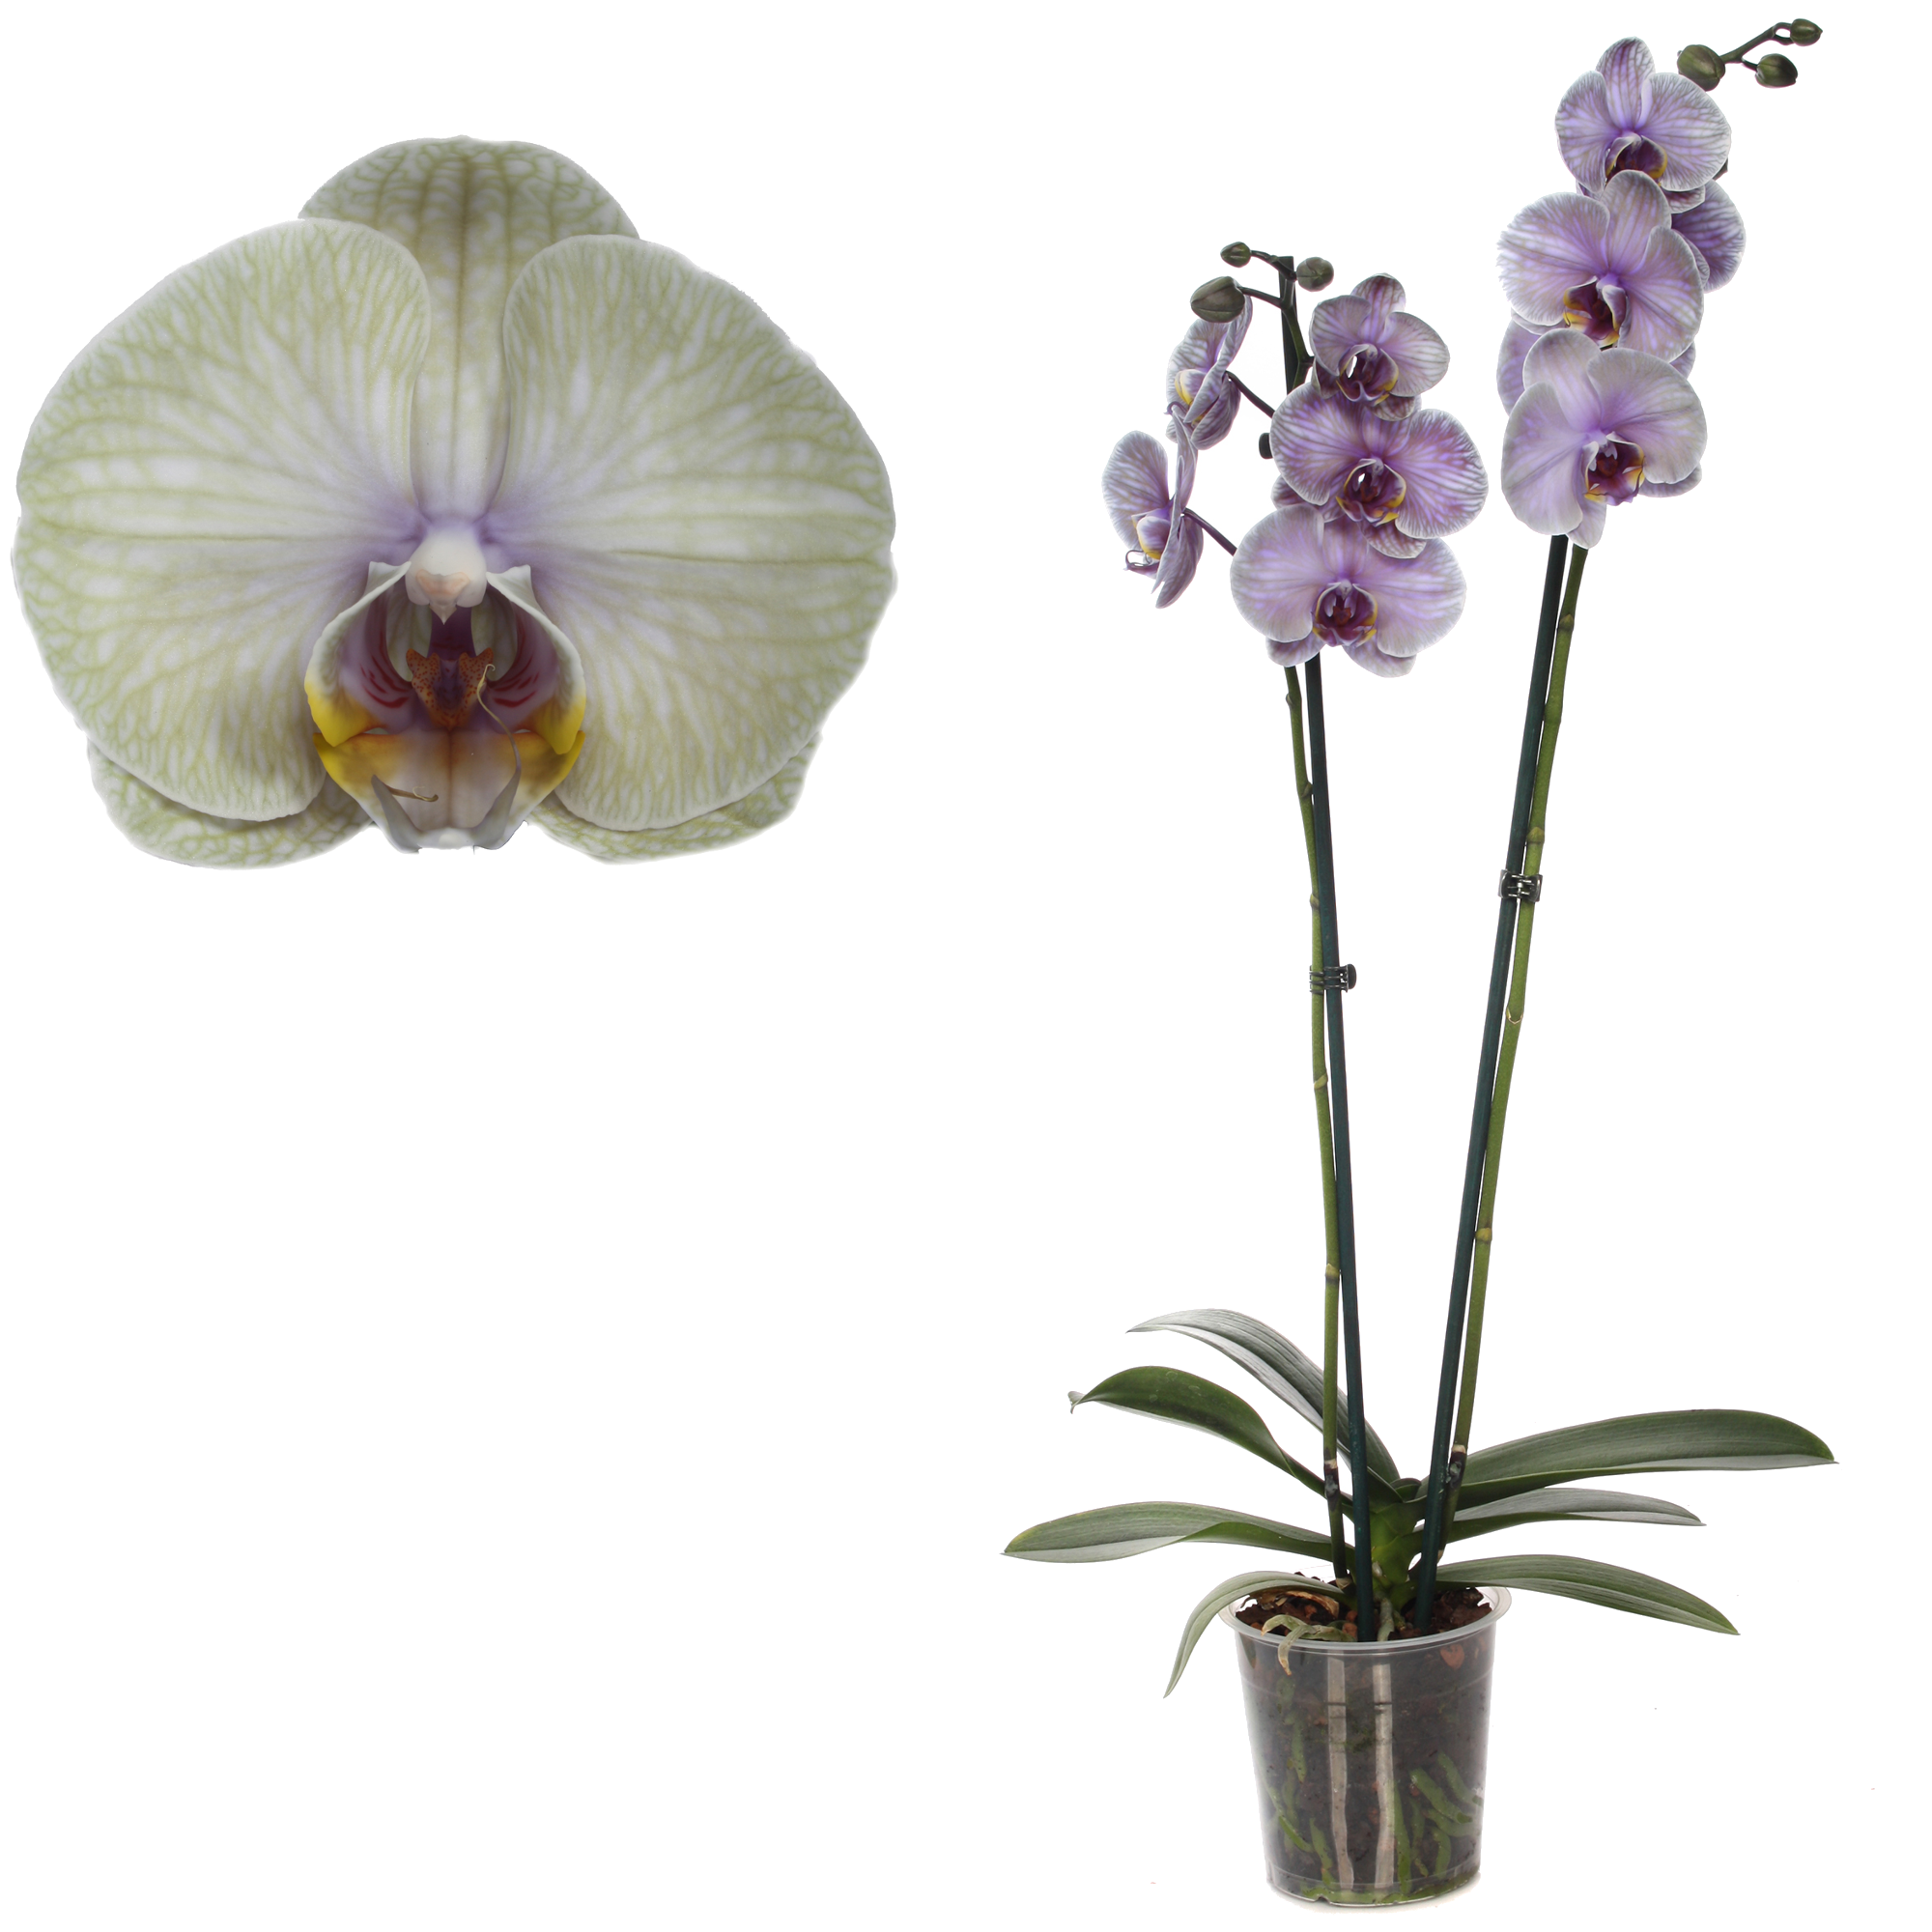 Schmetterlingsorchidee 'Royal Green' 2 Rispen grün 12 cm Topf + product picture